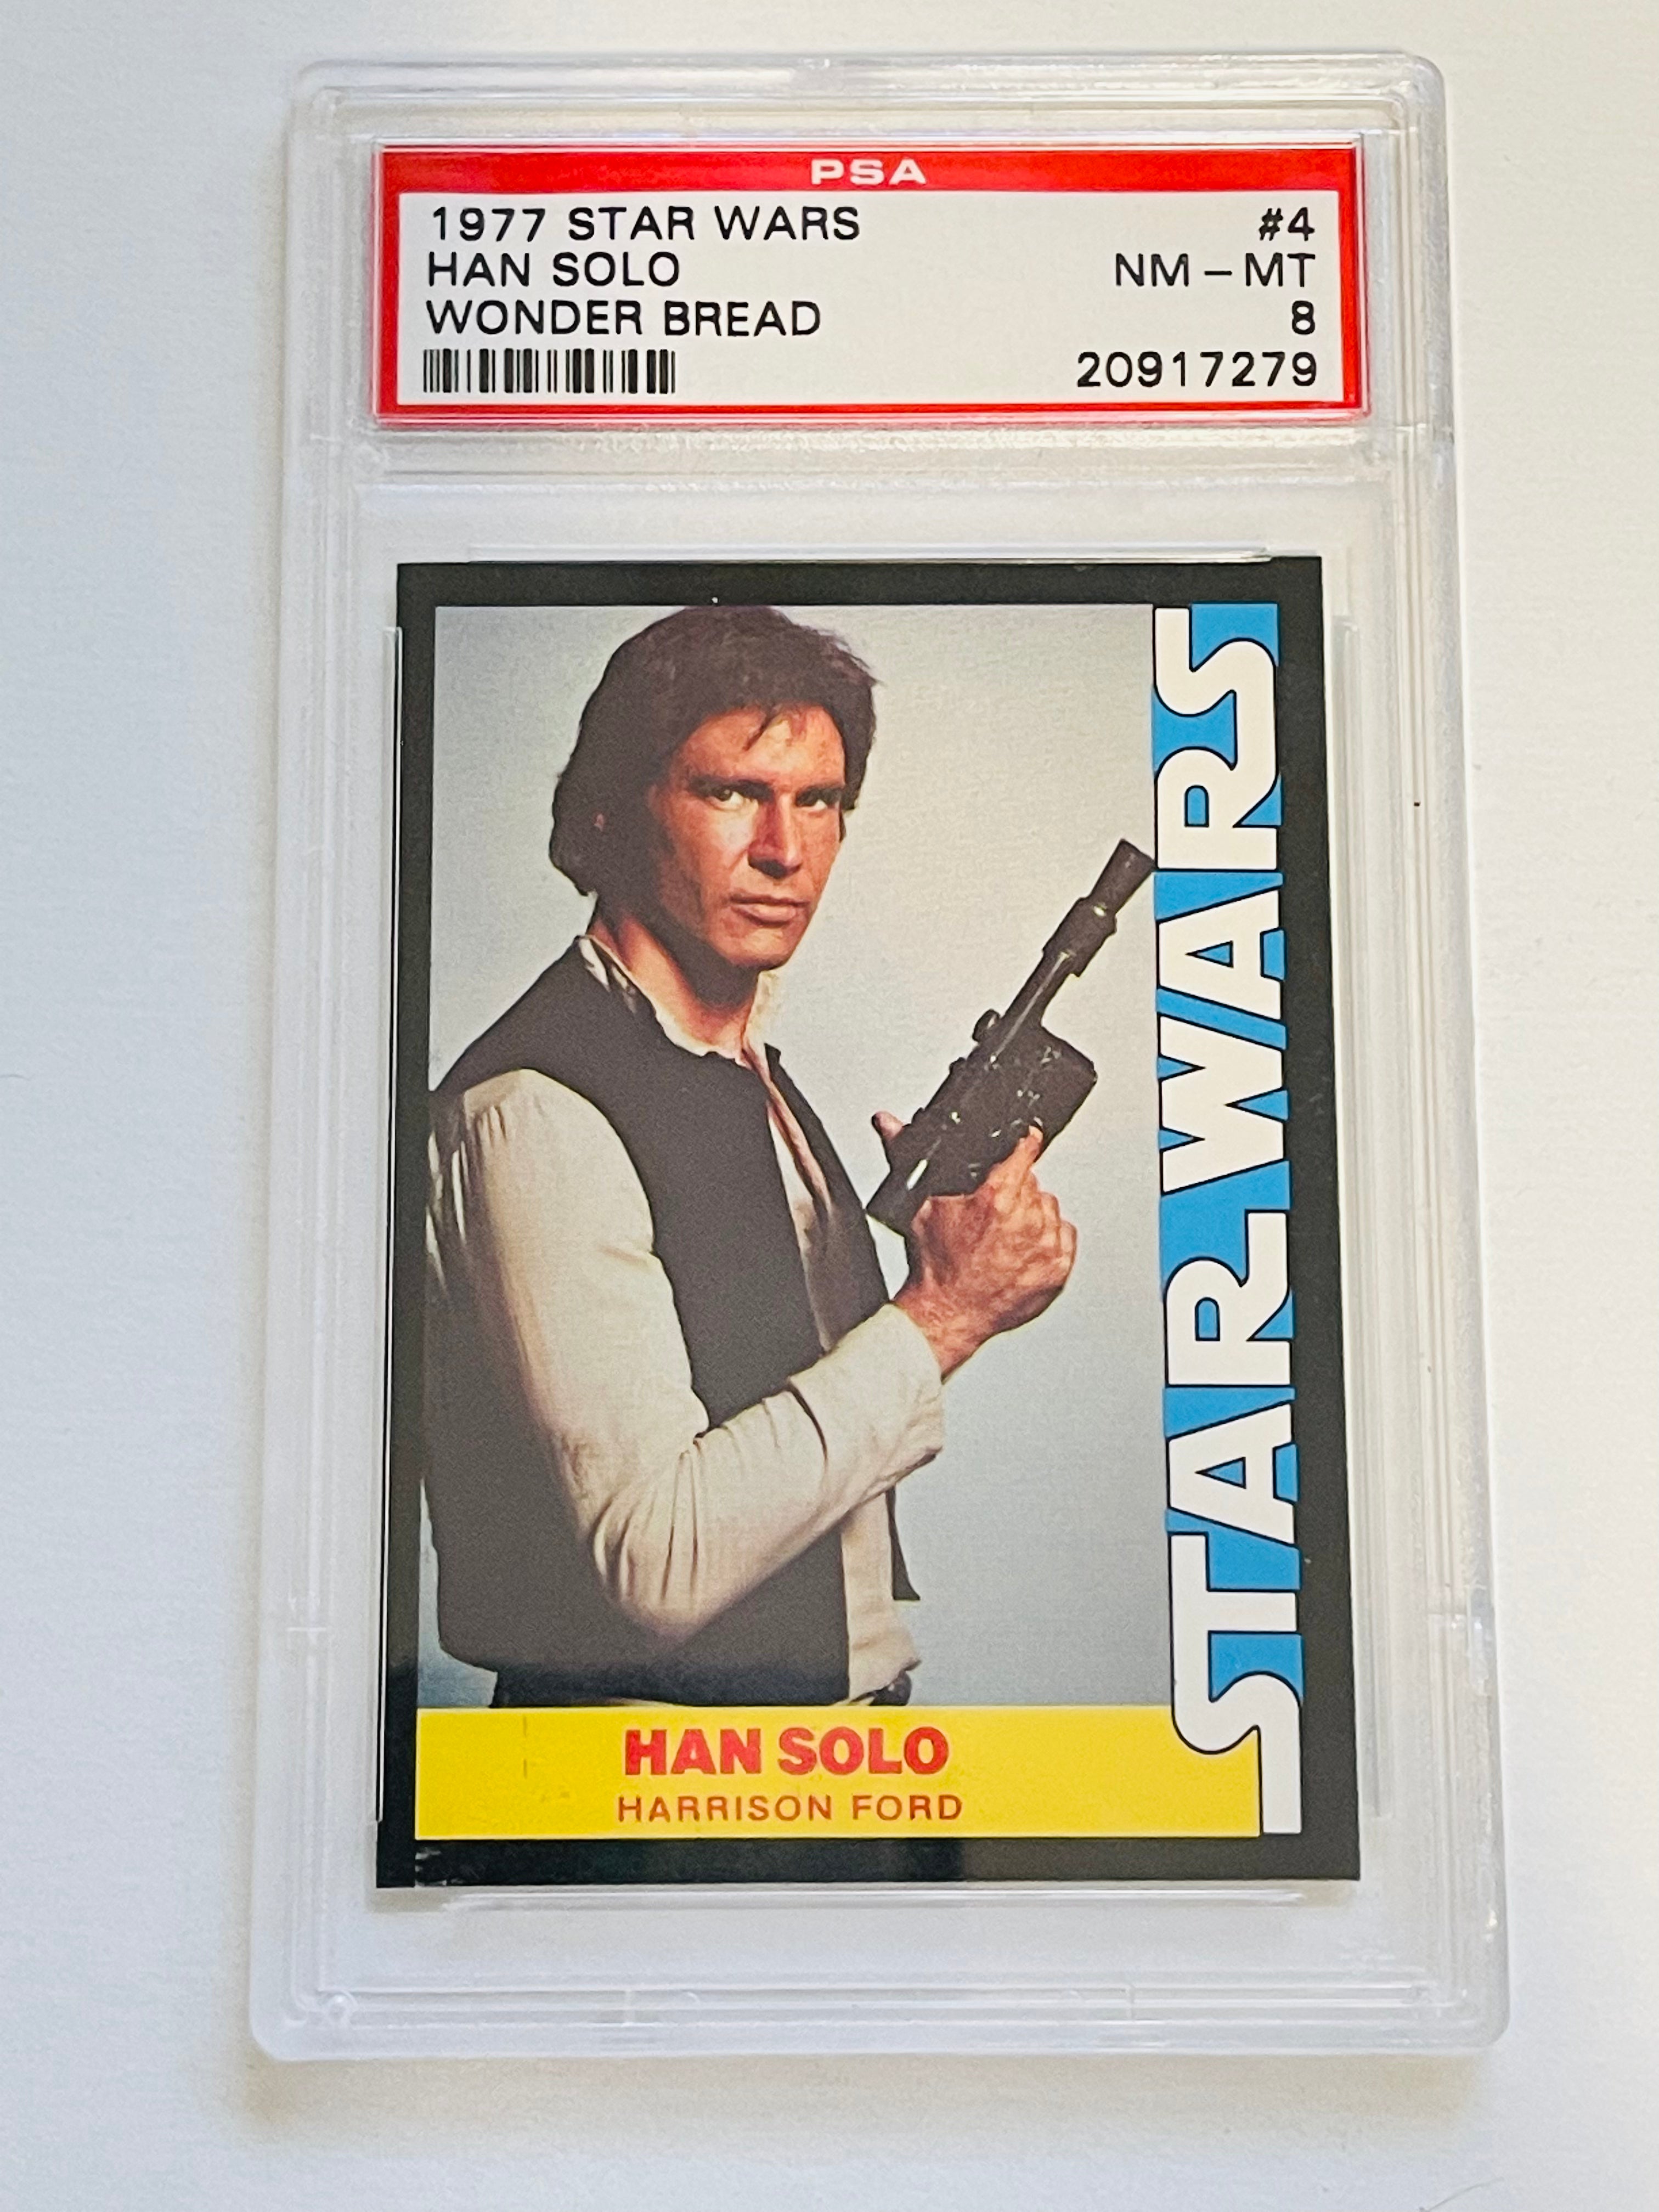 Star Wars Wonderbread Hans Solo PSA 8 graded card 1977